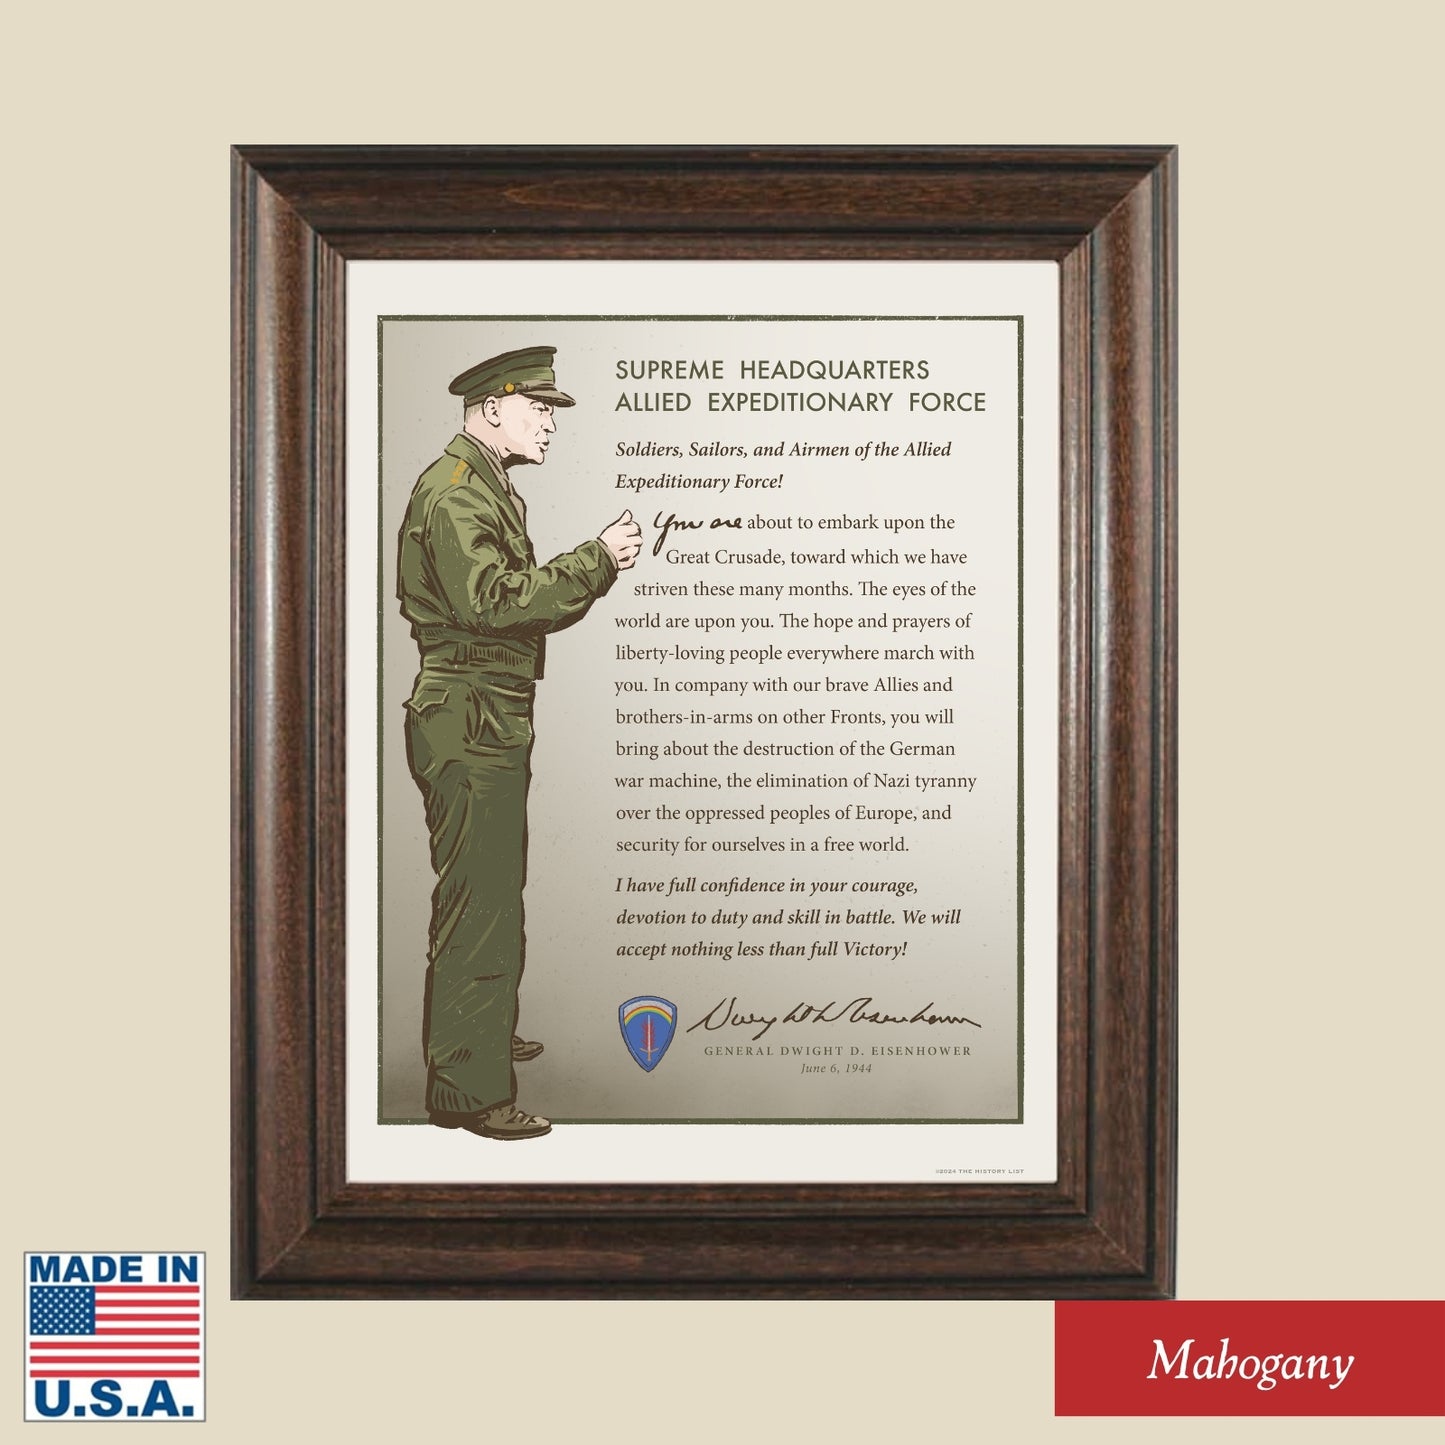 Gen. Dwight D. Eisenhower on D-Day — Original print framed in a solid wood frame made in America